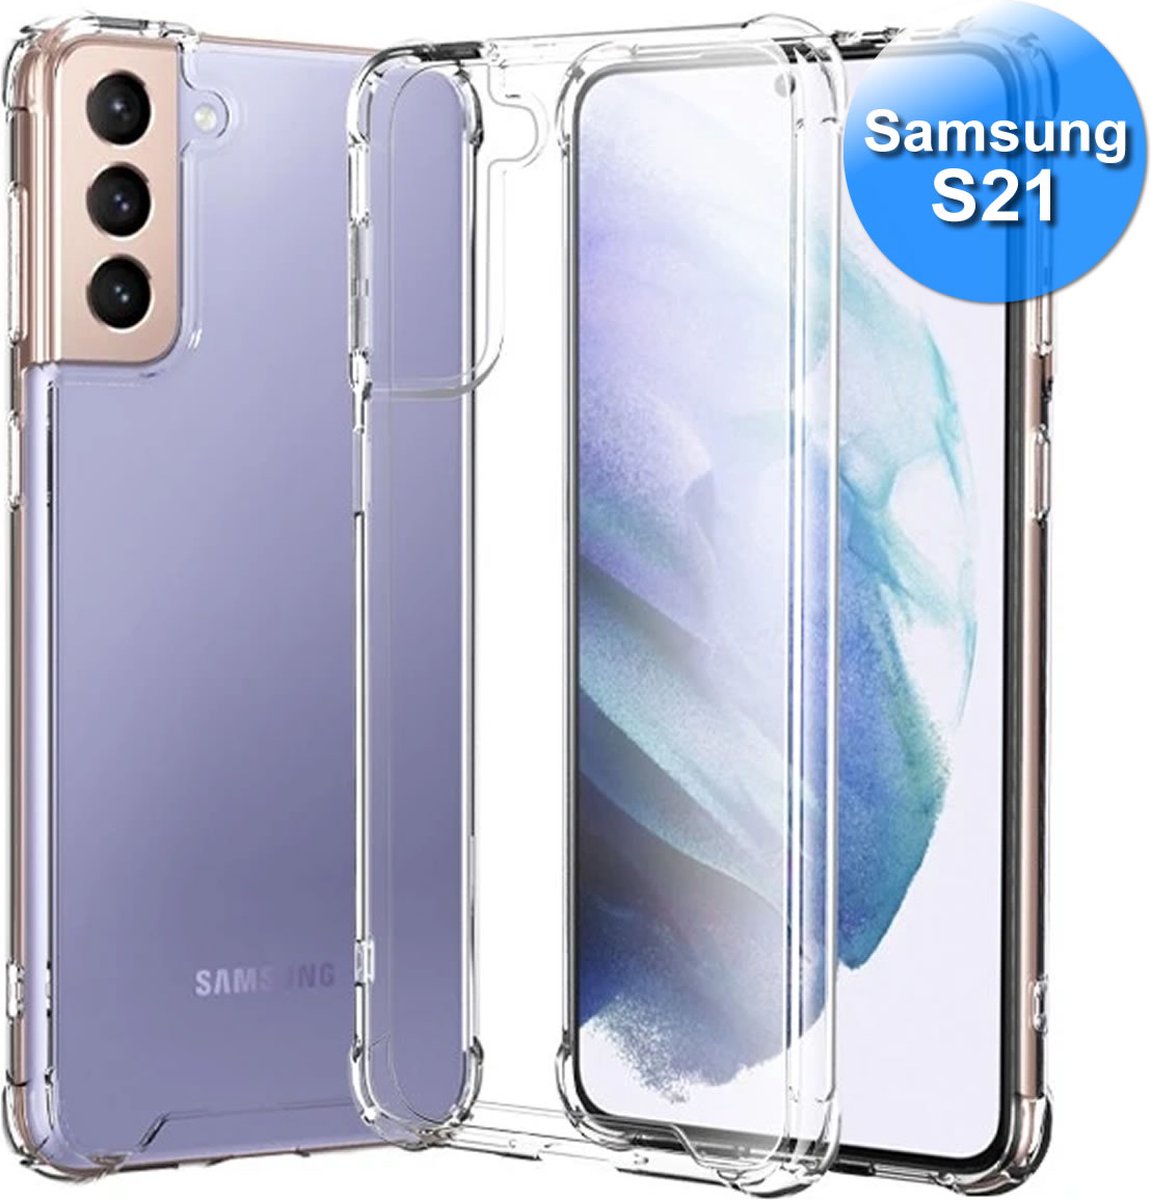 Samsung S21 Hoesje Transparant Anti Shock - Samsung S21 Case - Samsung S21 Hoes - Transparant - Anti Shock Case